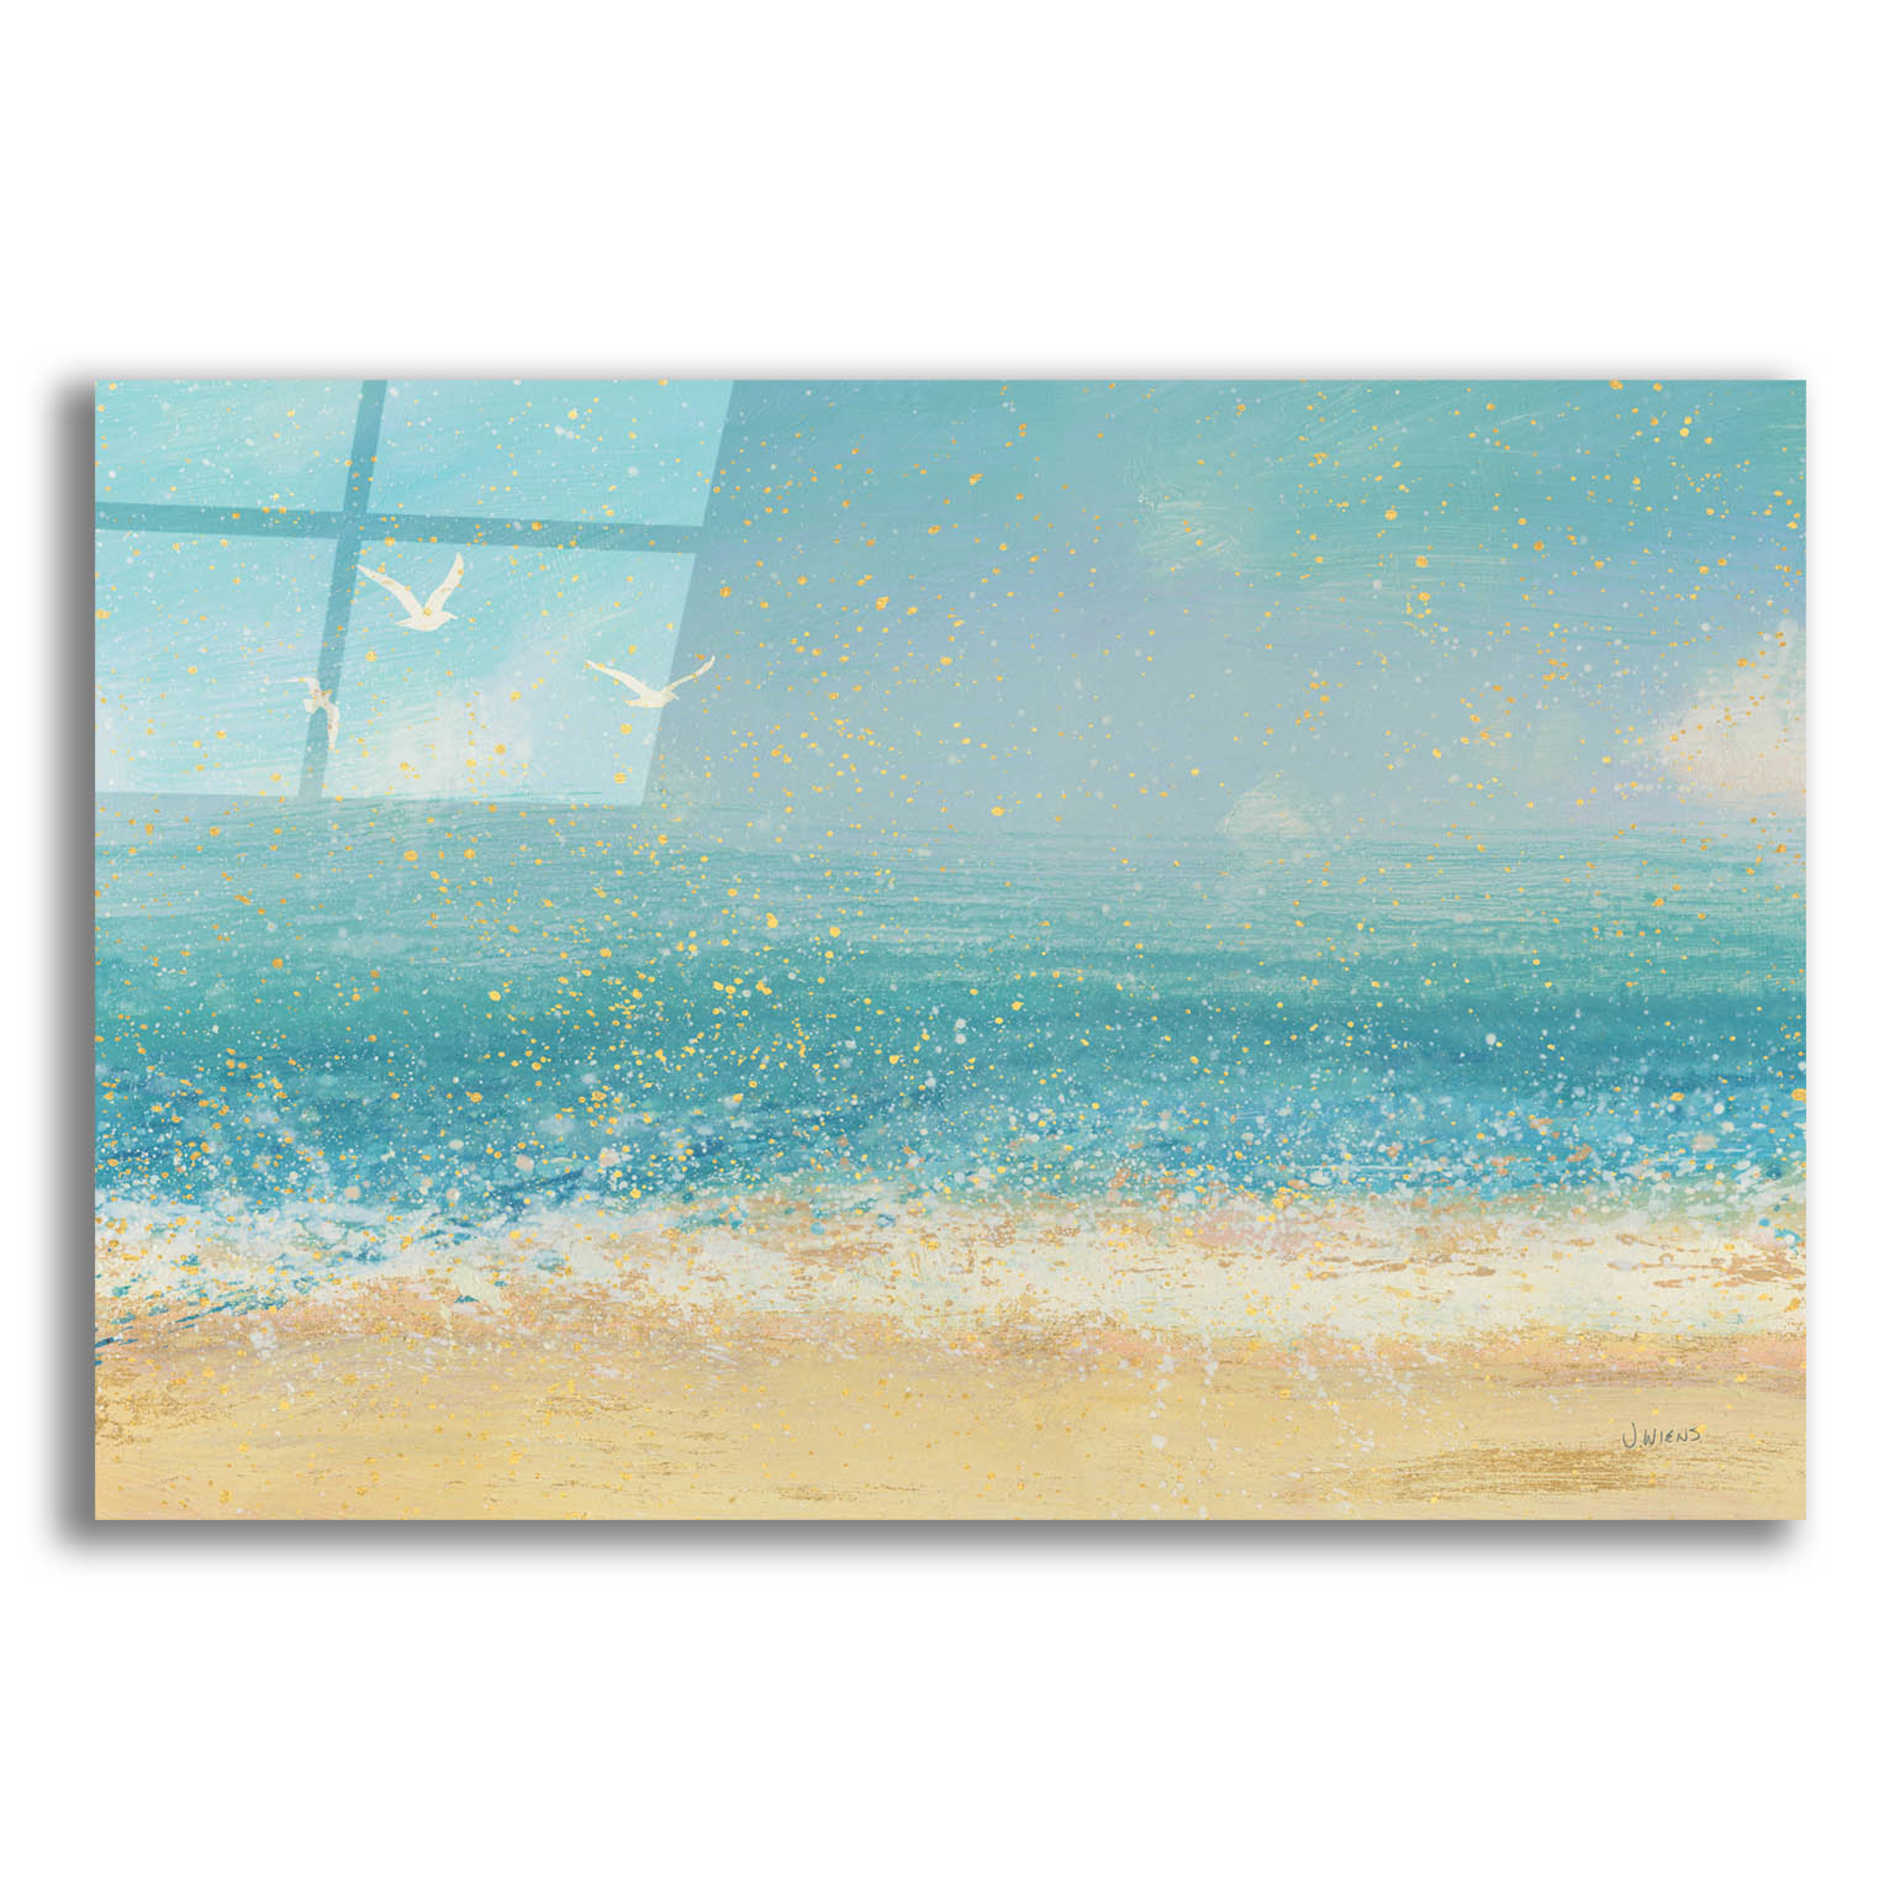 Epic Art 'Splatter Beach I' by James Wiens, Acrylic Glass Wall Art,18x12x1.1x0,26x18x1.1x0,40x26x1.74x0,60x40x1.74x0